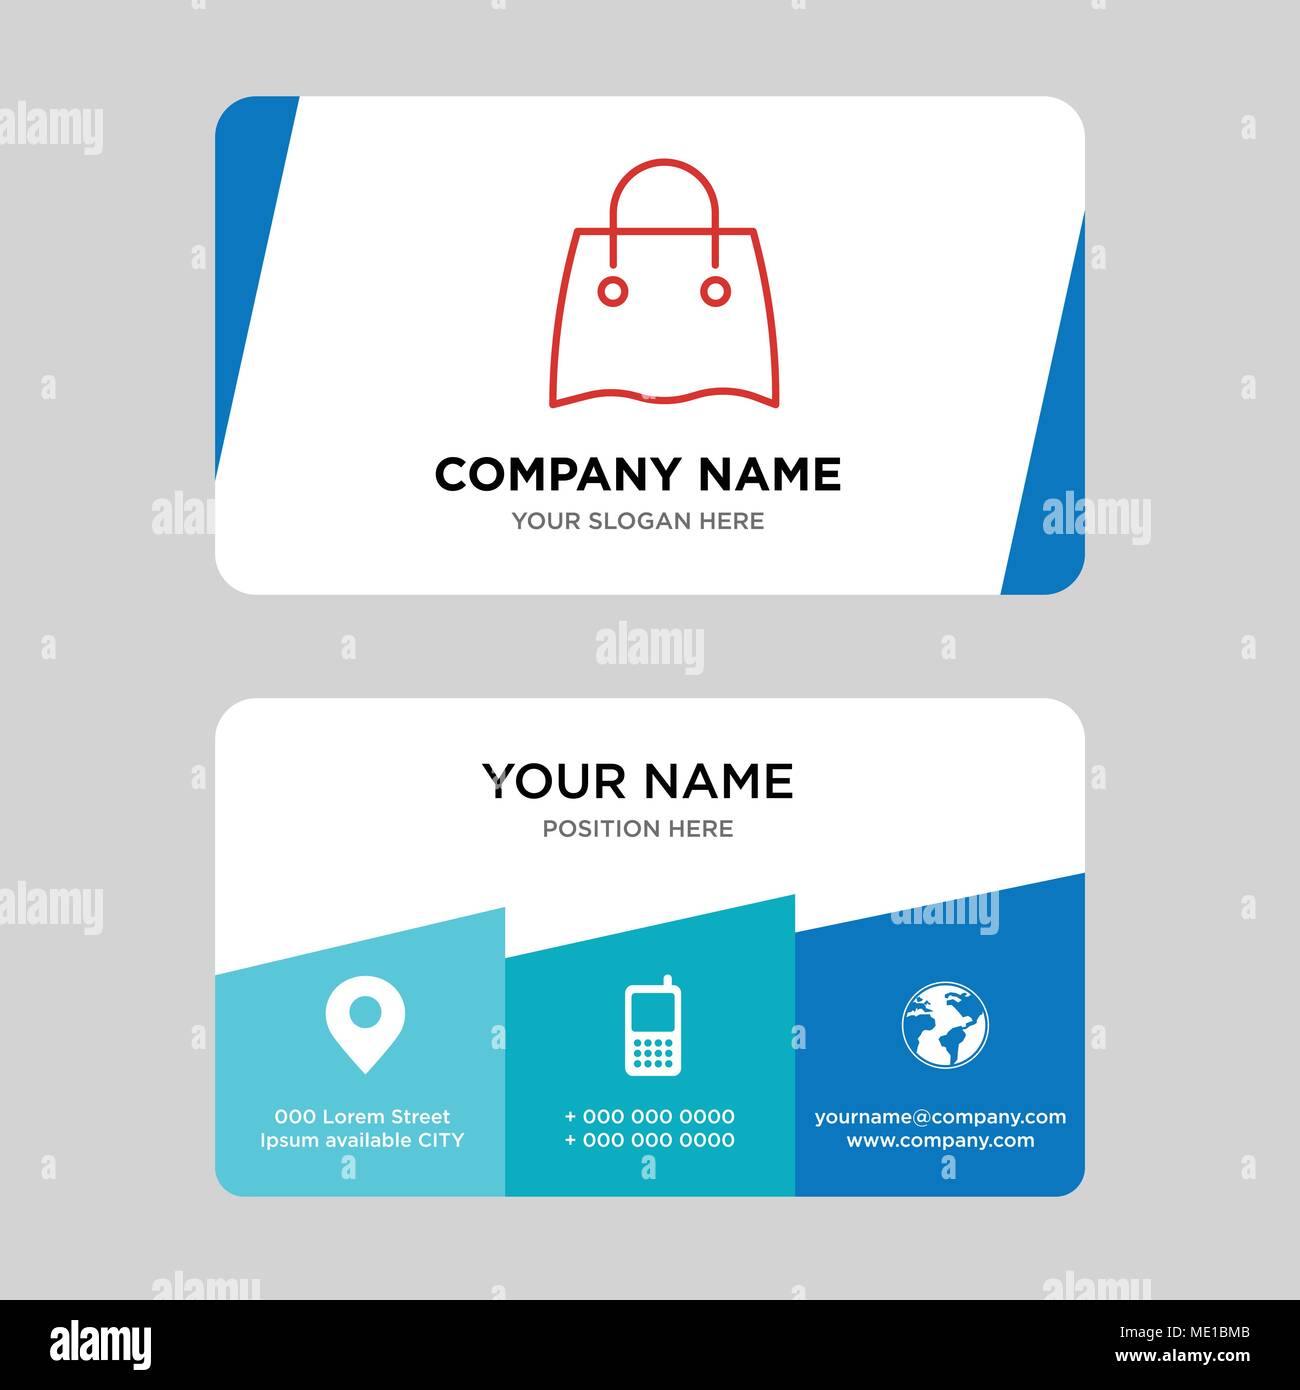 Personal Shopper Business Card Template